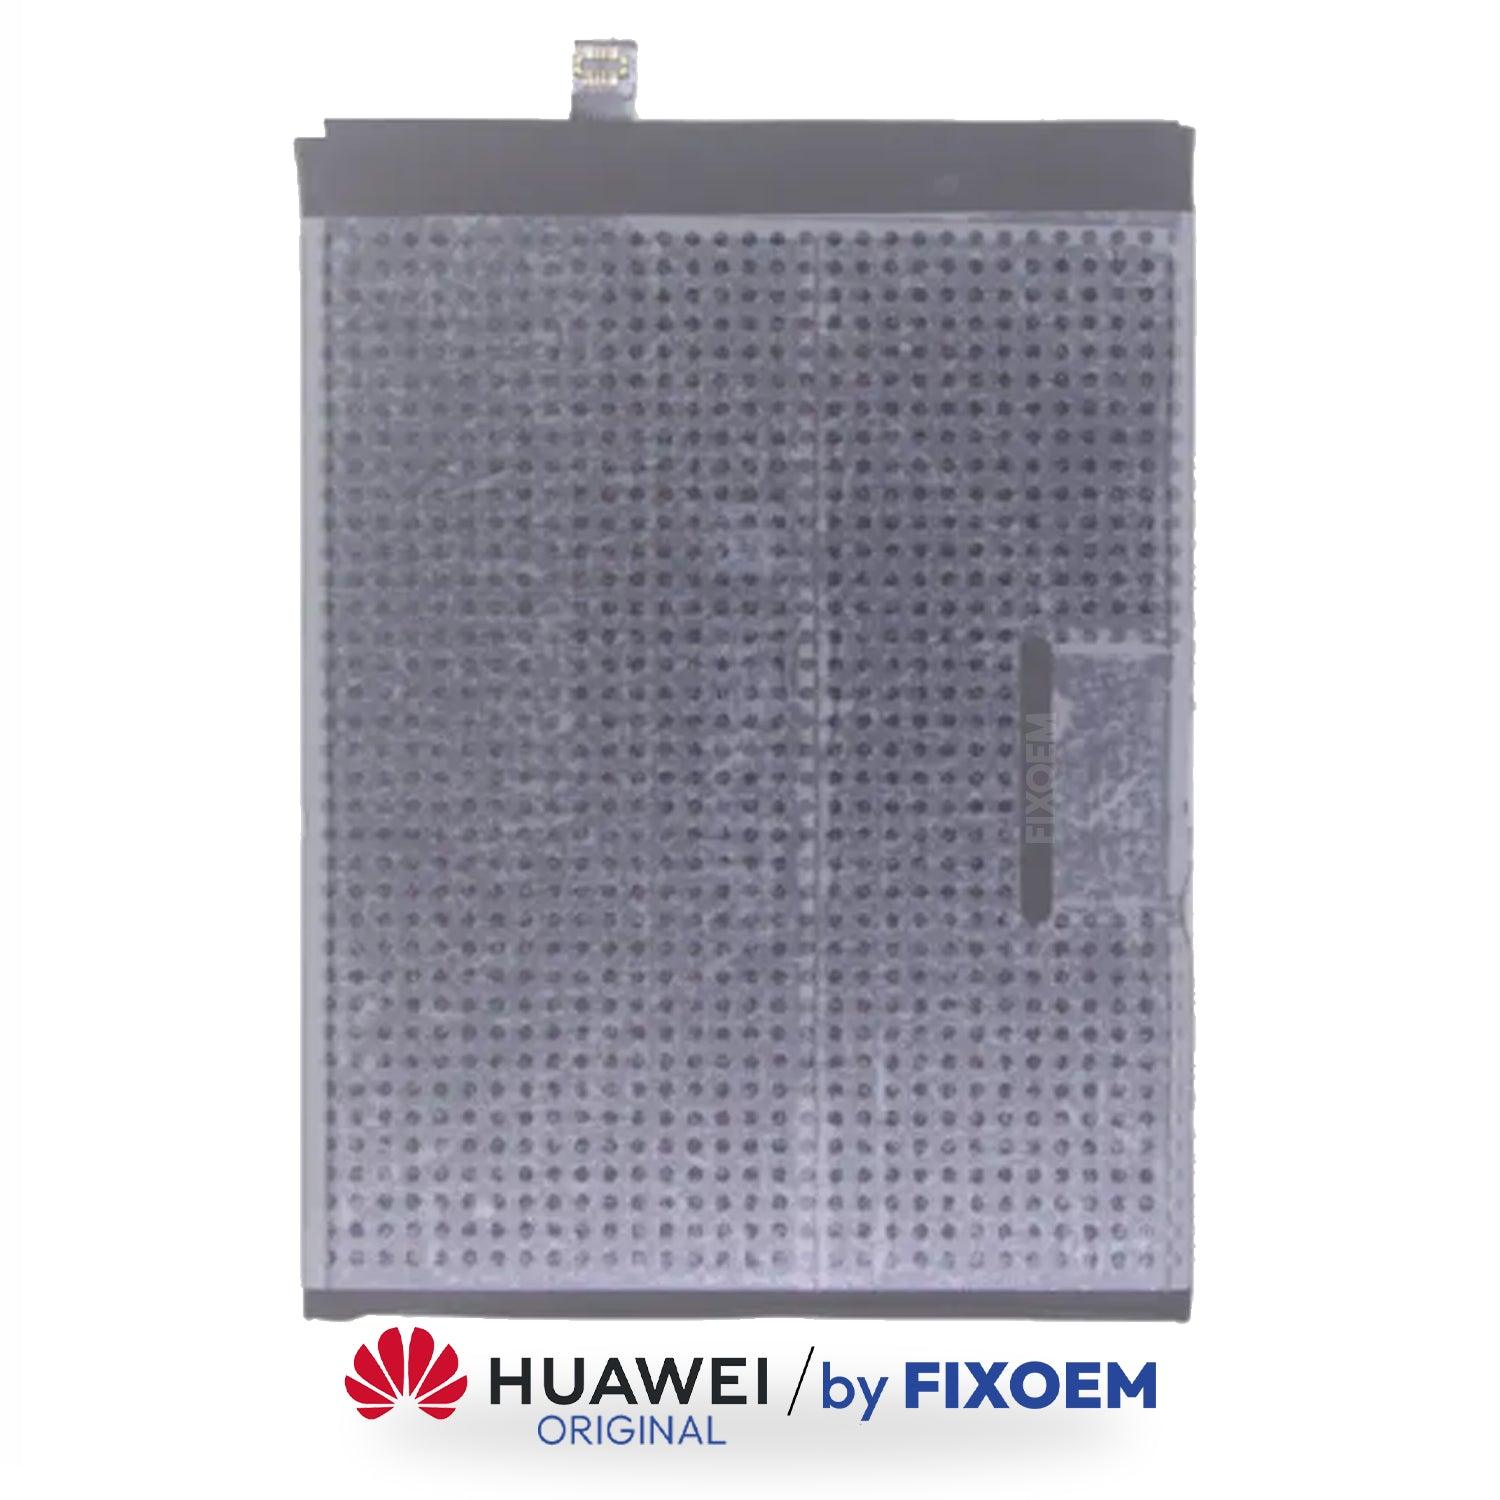 Bateria Huawei Y9 2019/ Mate 9 Pro/ Y9 2019/Y7P/Y7 Prime/ Enjoy 7 Plus Hb406689Ecw |+2,000 reseñas 4.8/5 ⭐